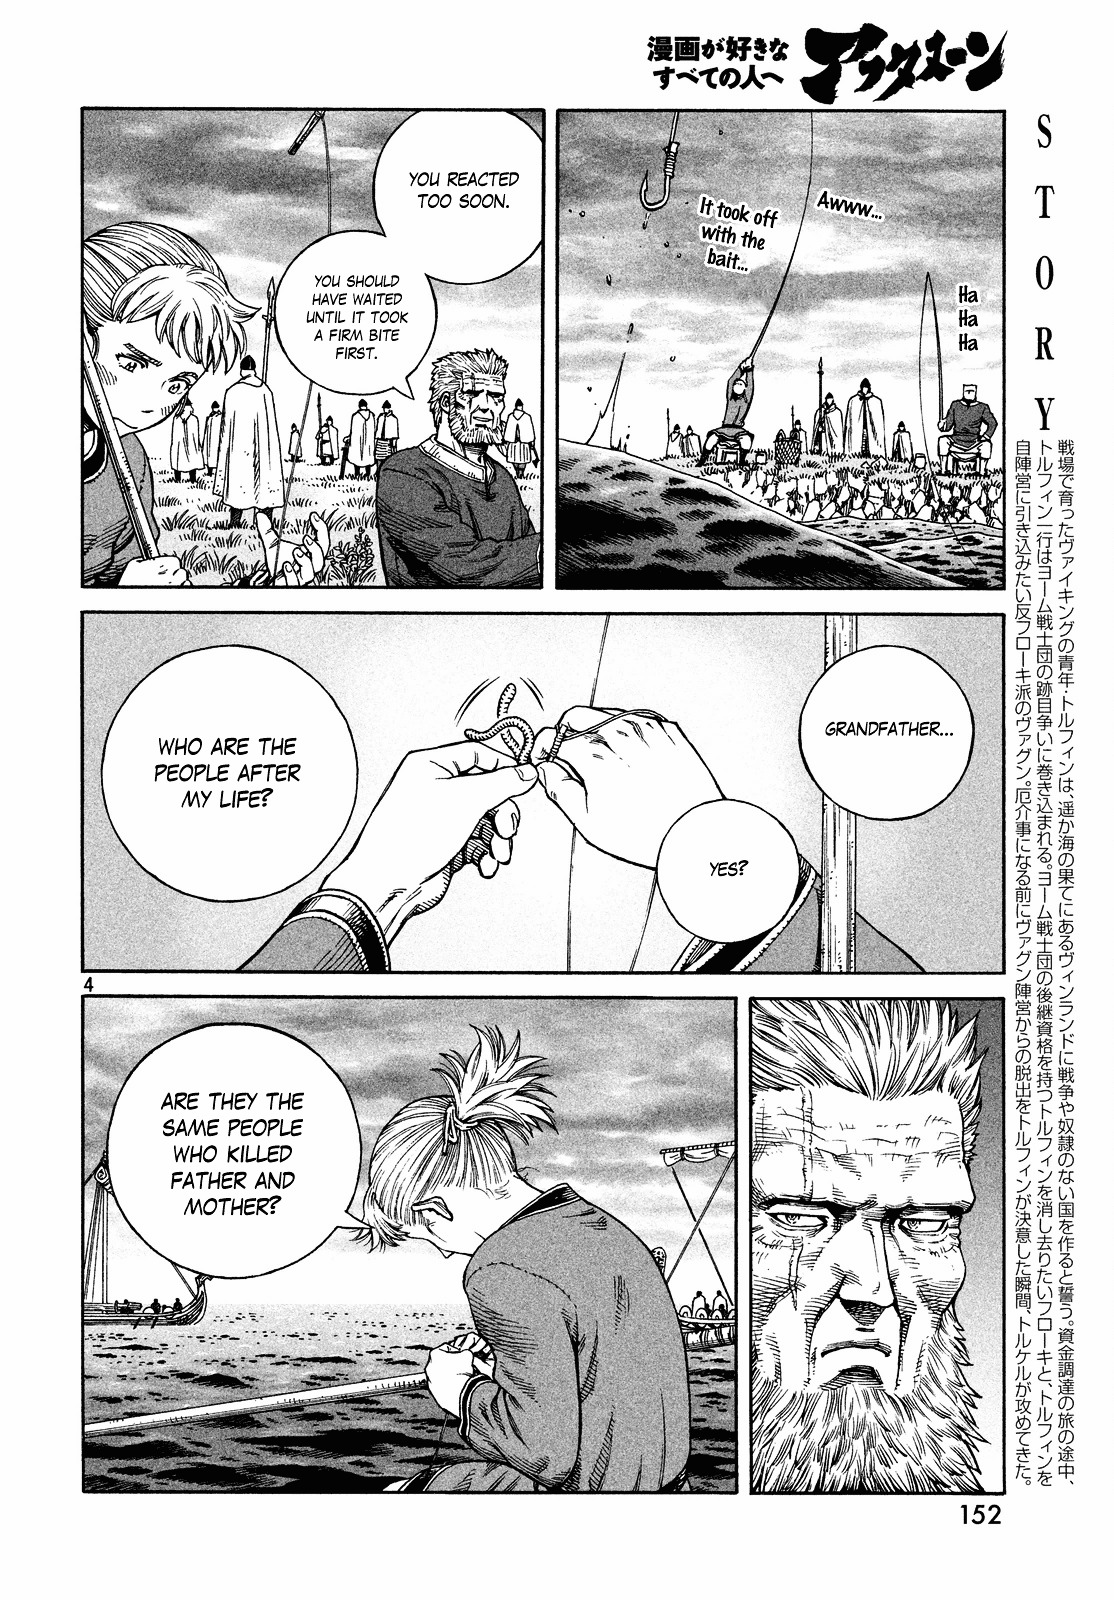 Vinland Saga Manga Manga Chapter - 133 - image 4